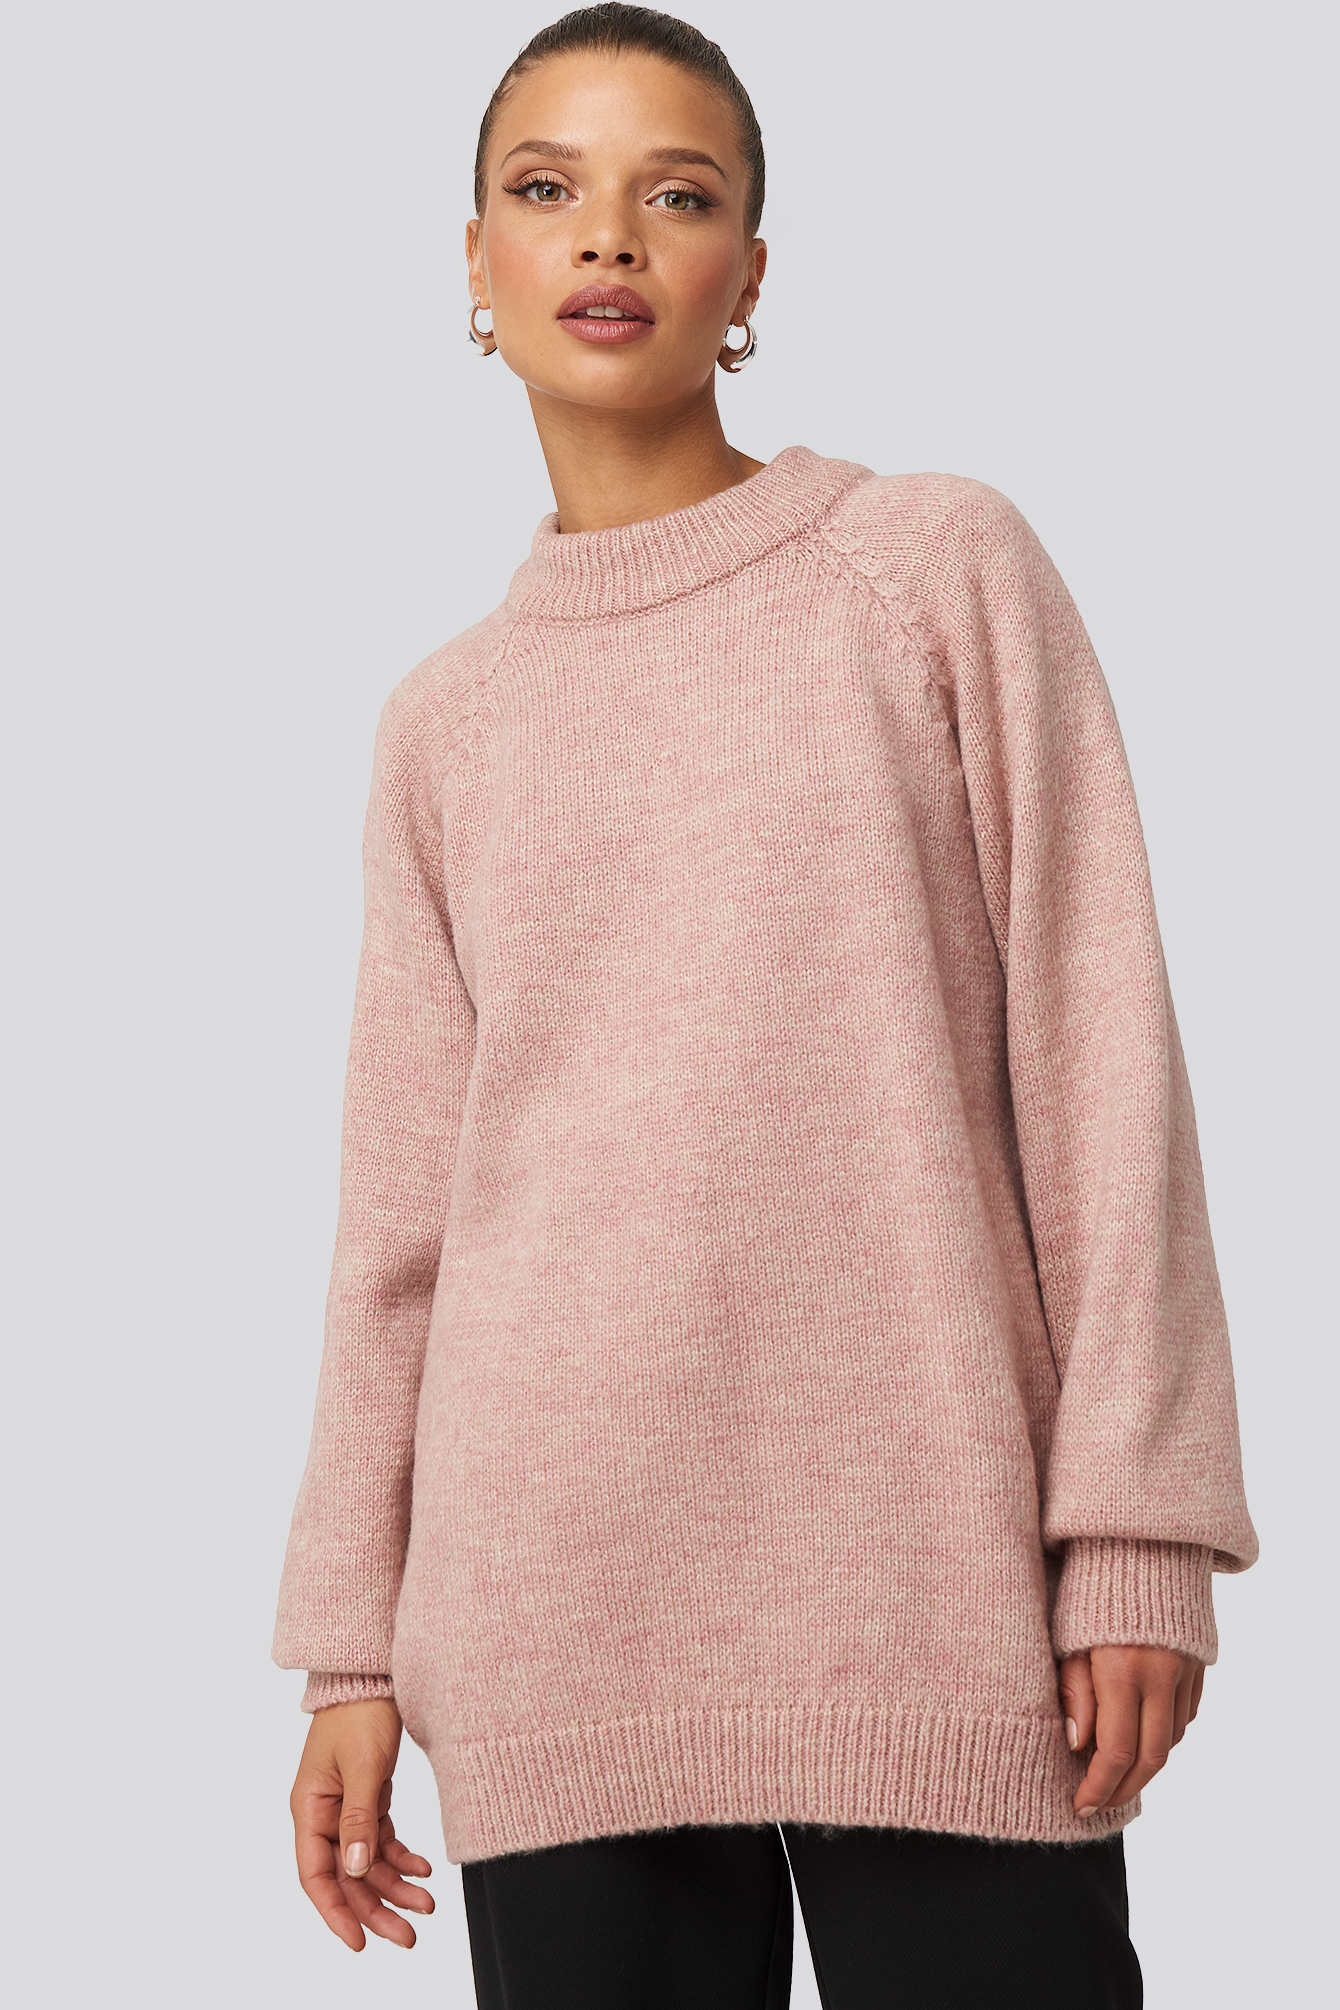 Dusty Rose Raglan Sleeve Knitted Sweater